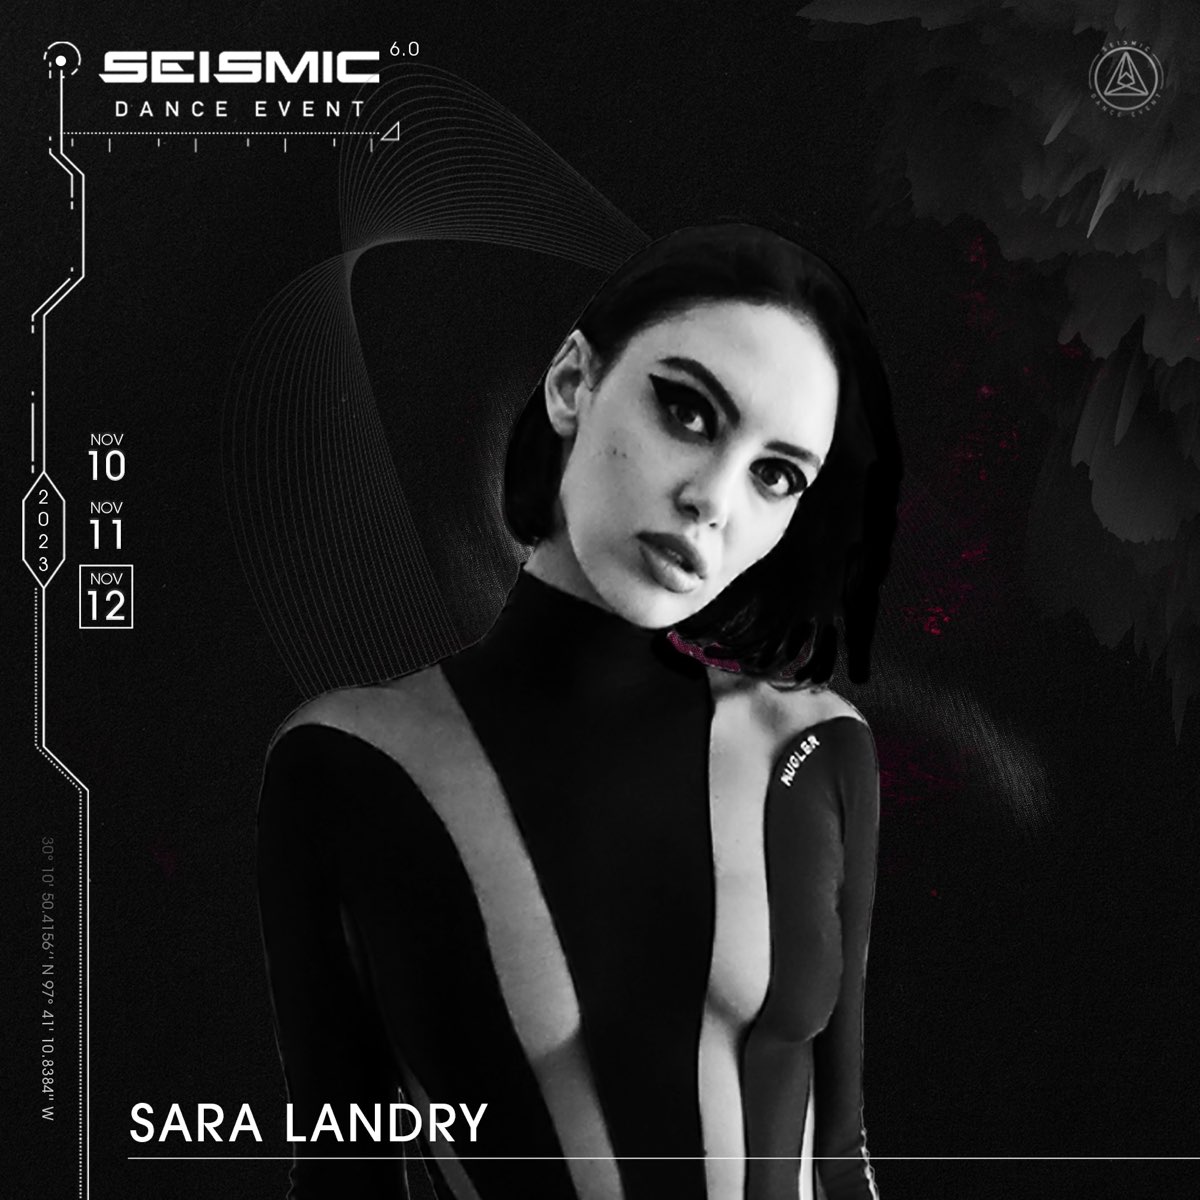 Sara Landry at Seismic Dance Event 6.0 (DJ Mix) - Album by Sara